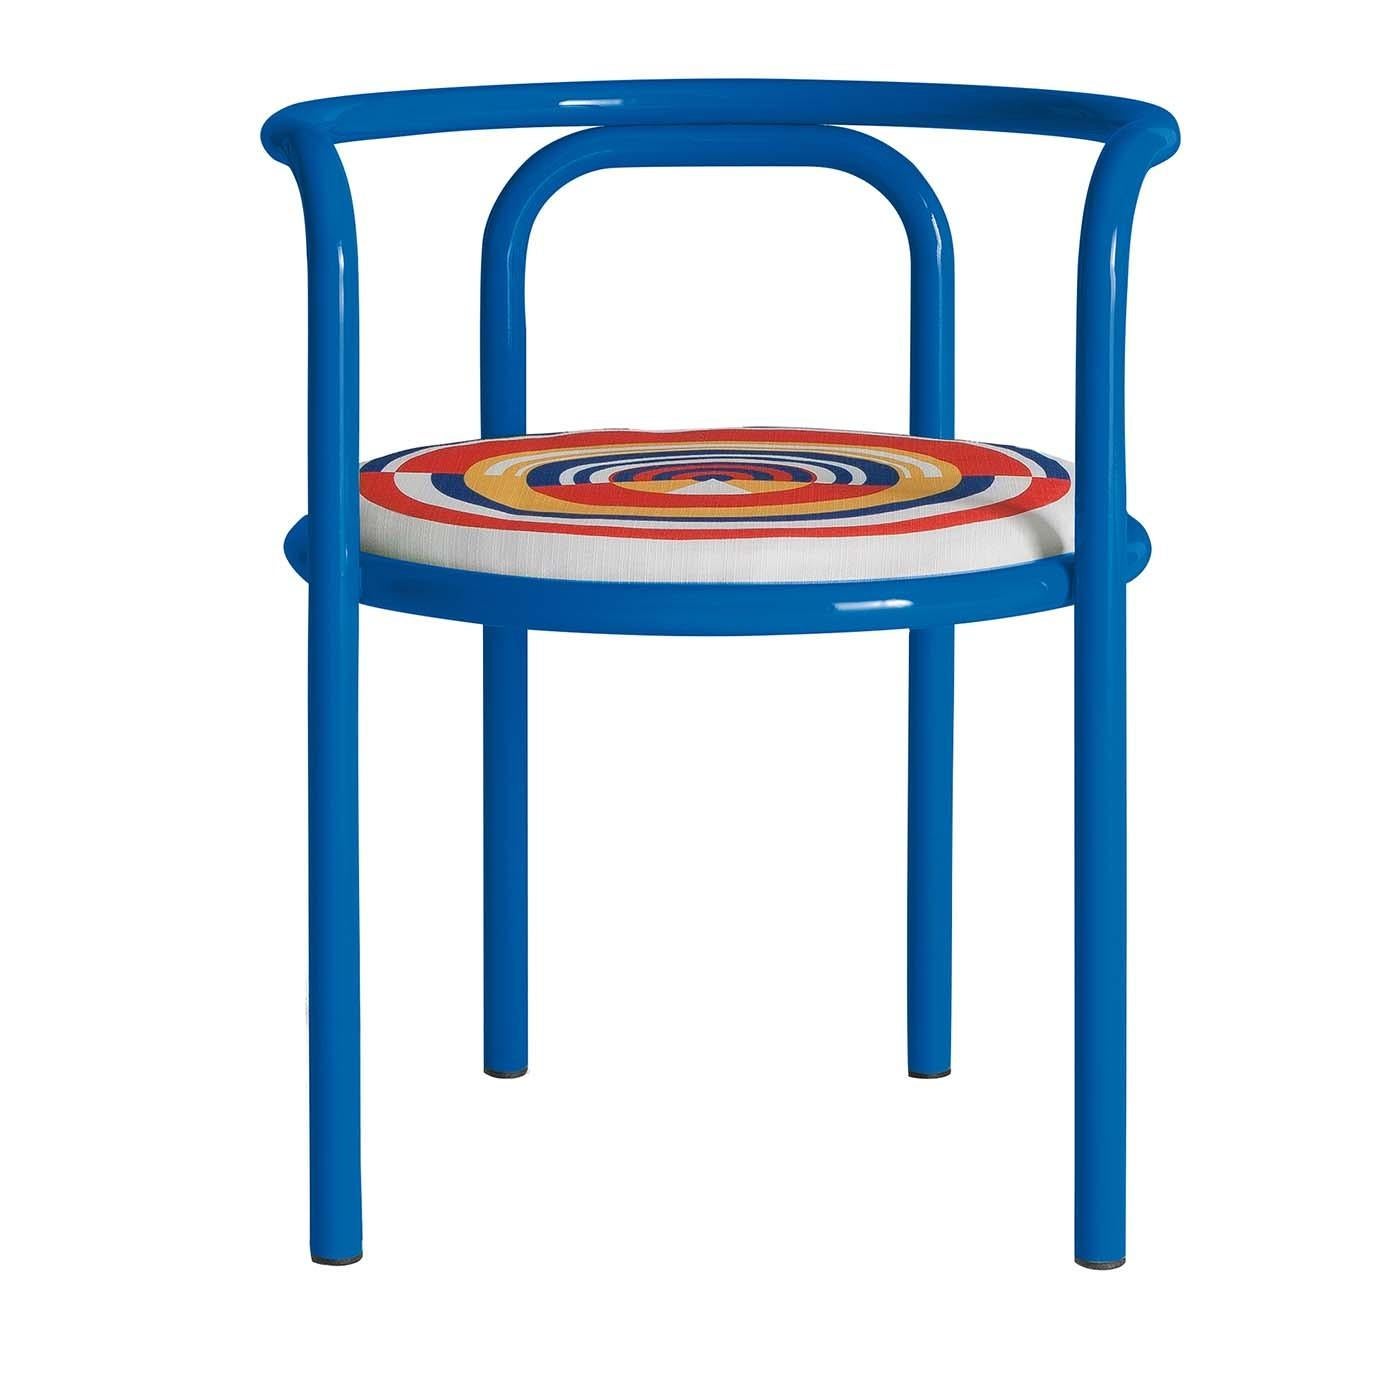 Italian Locus Solus Blue Chair by Gae Aulenti